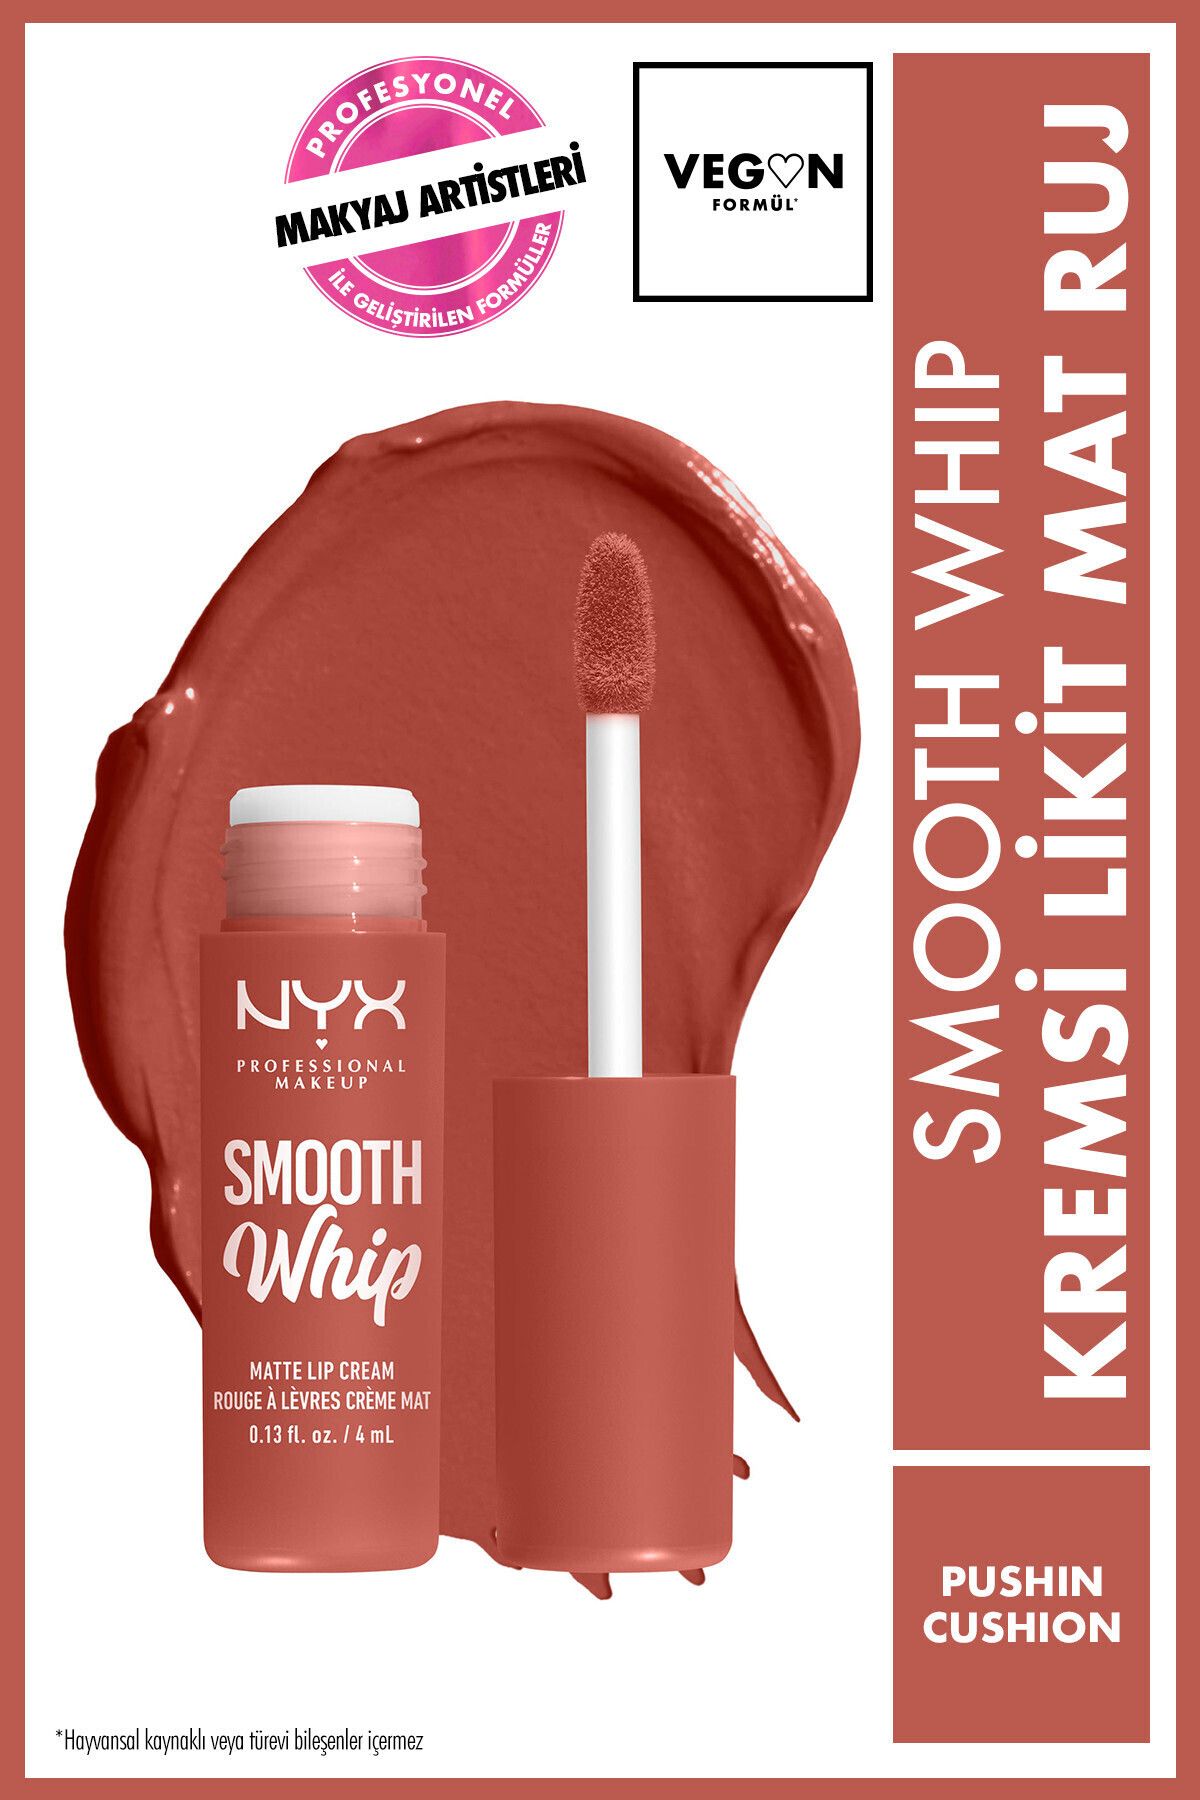 NYX Professional Makeup Smooth Whip Kremsi Likit Mat Ruj -pushin Cushion